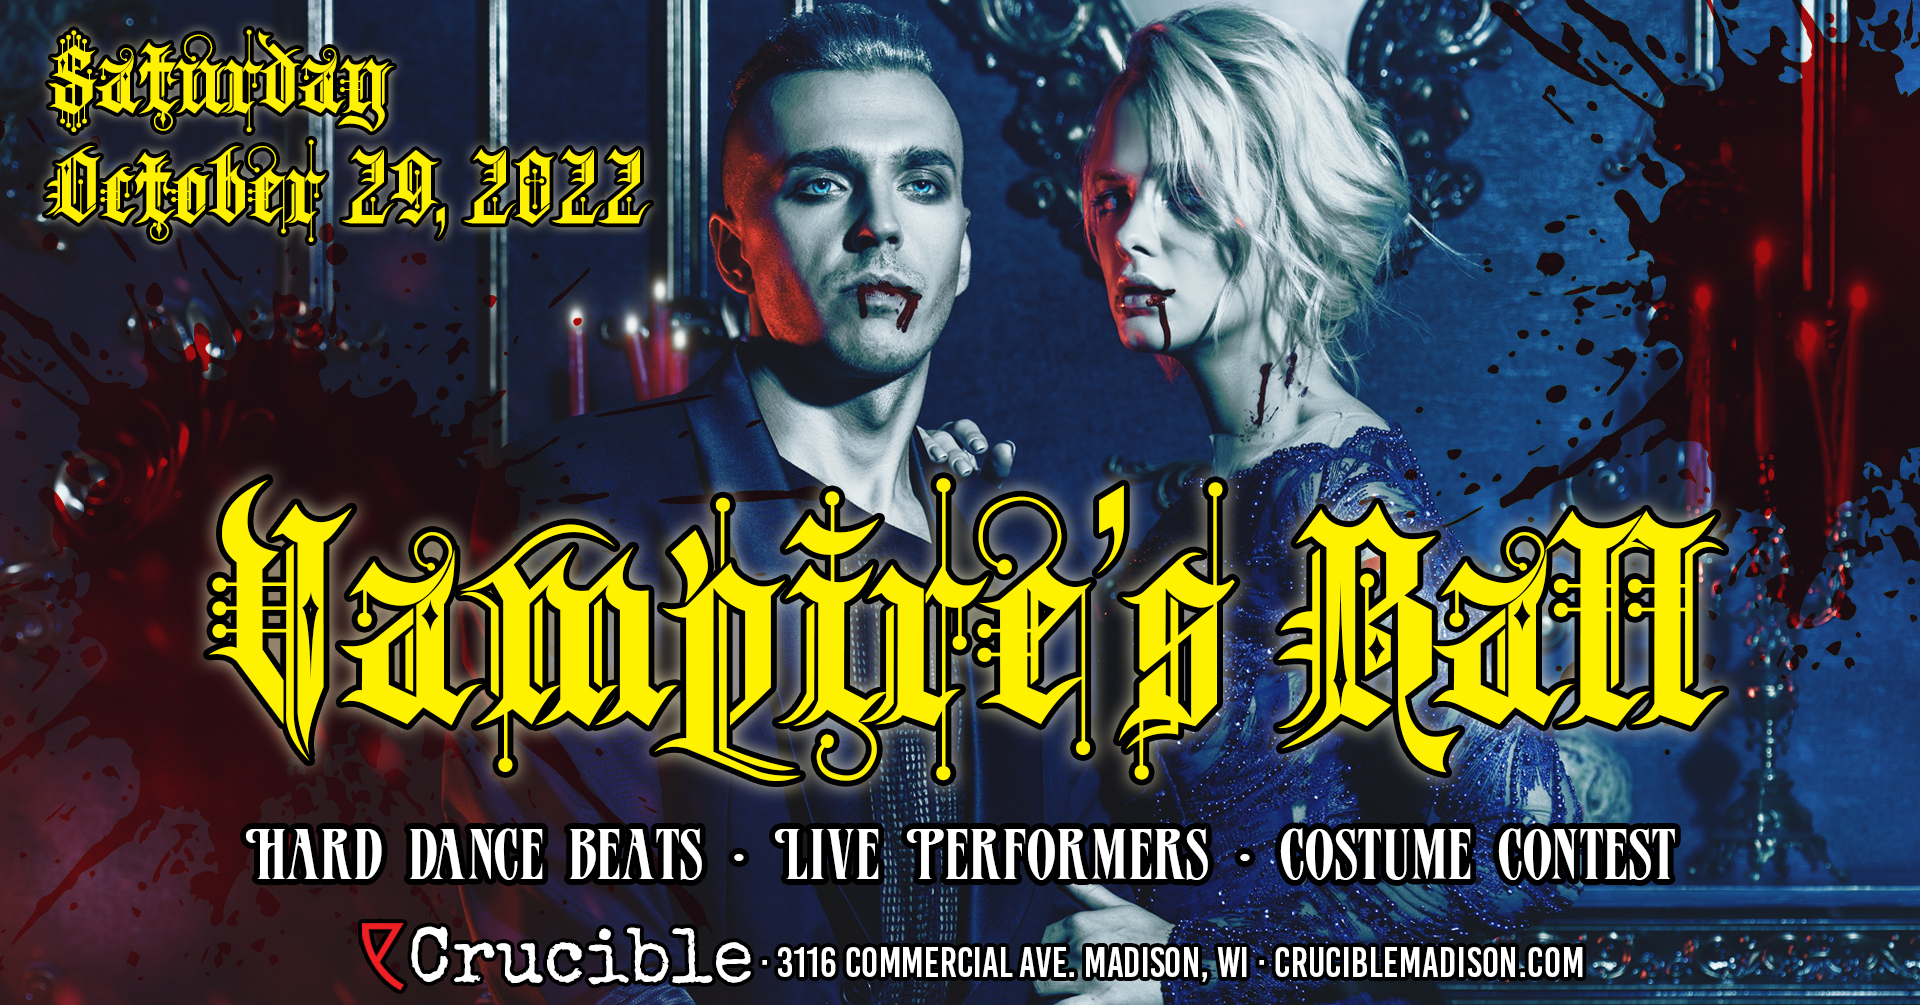 Salem, Massachusetts - Witch City - annual Vampire's Masquerade Ball oct  22nd!